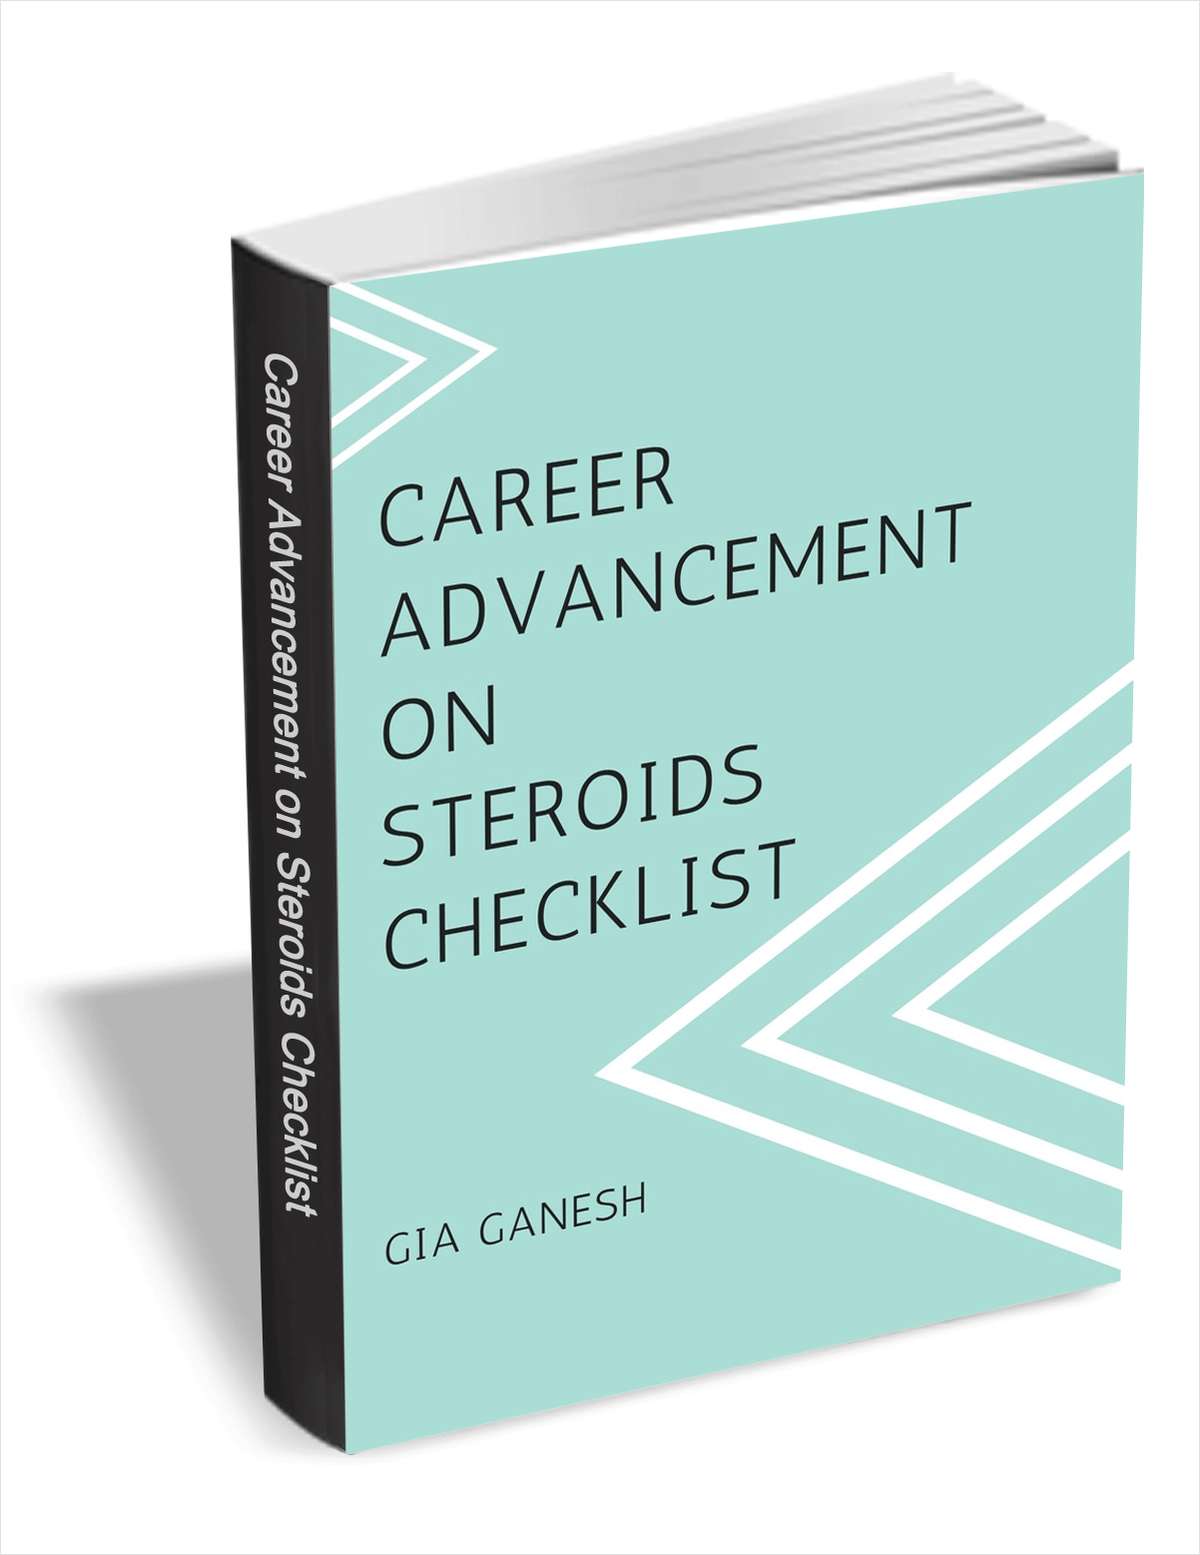 Career Advancement on Steroids Checklist